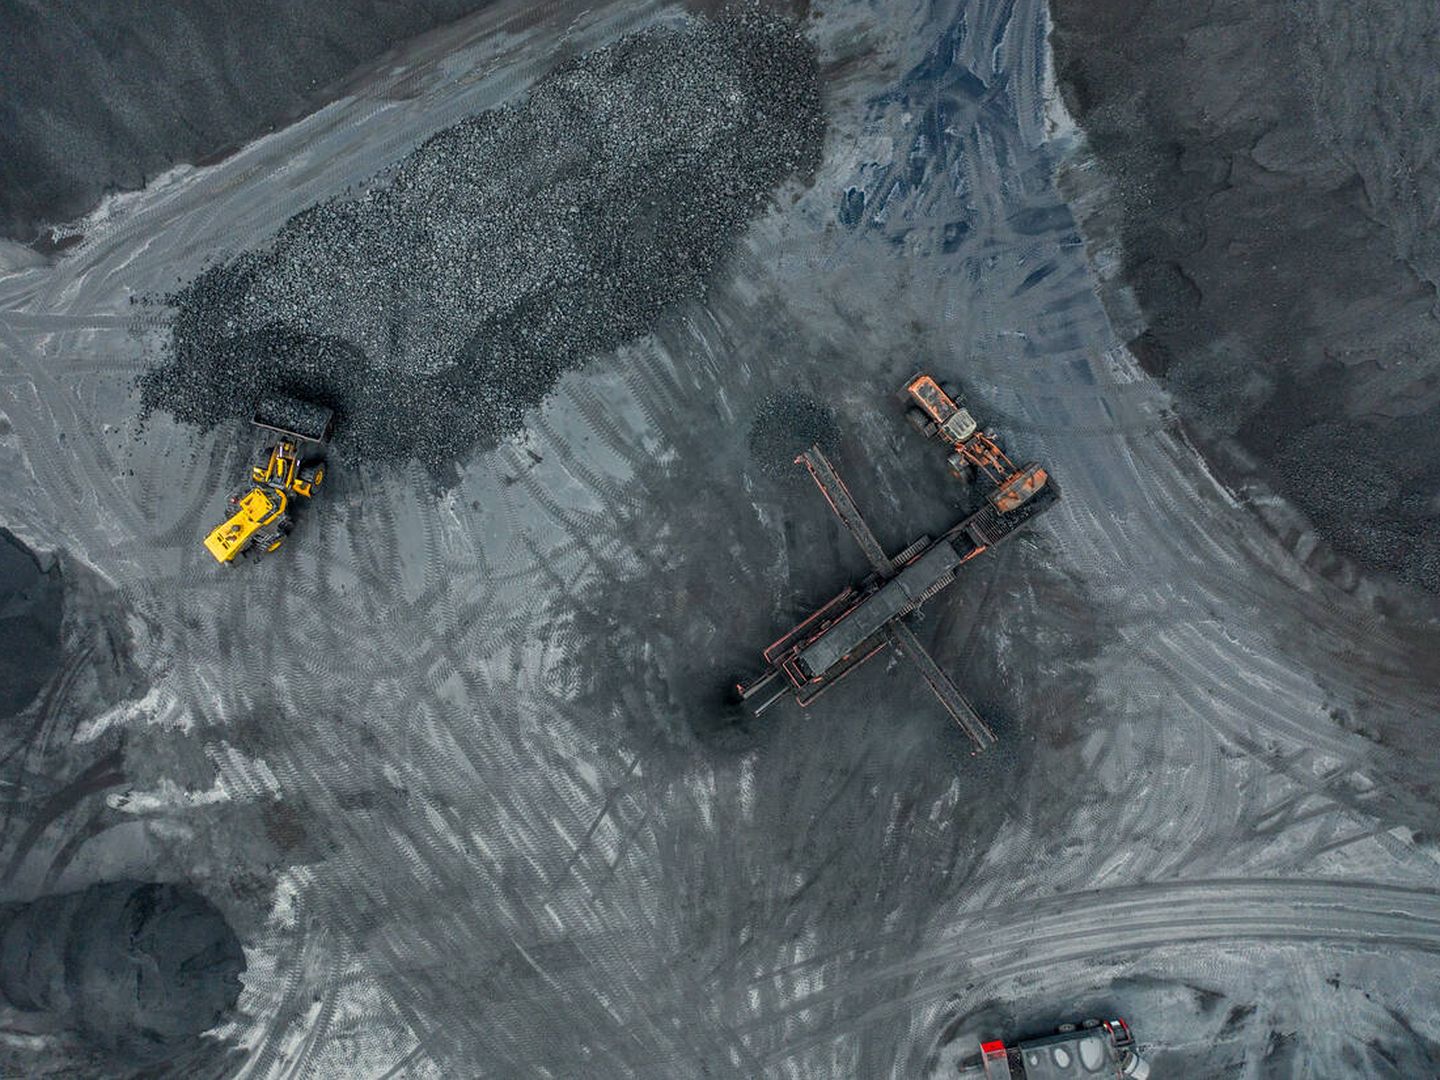 Coal mineral exploitation